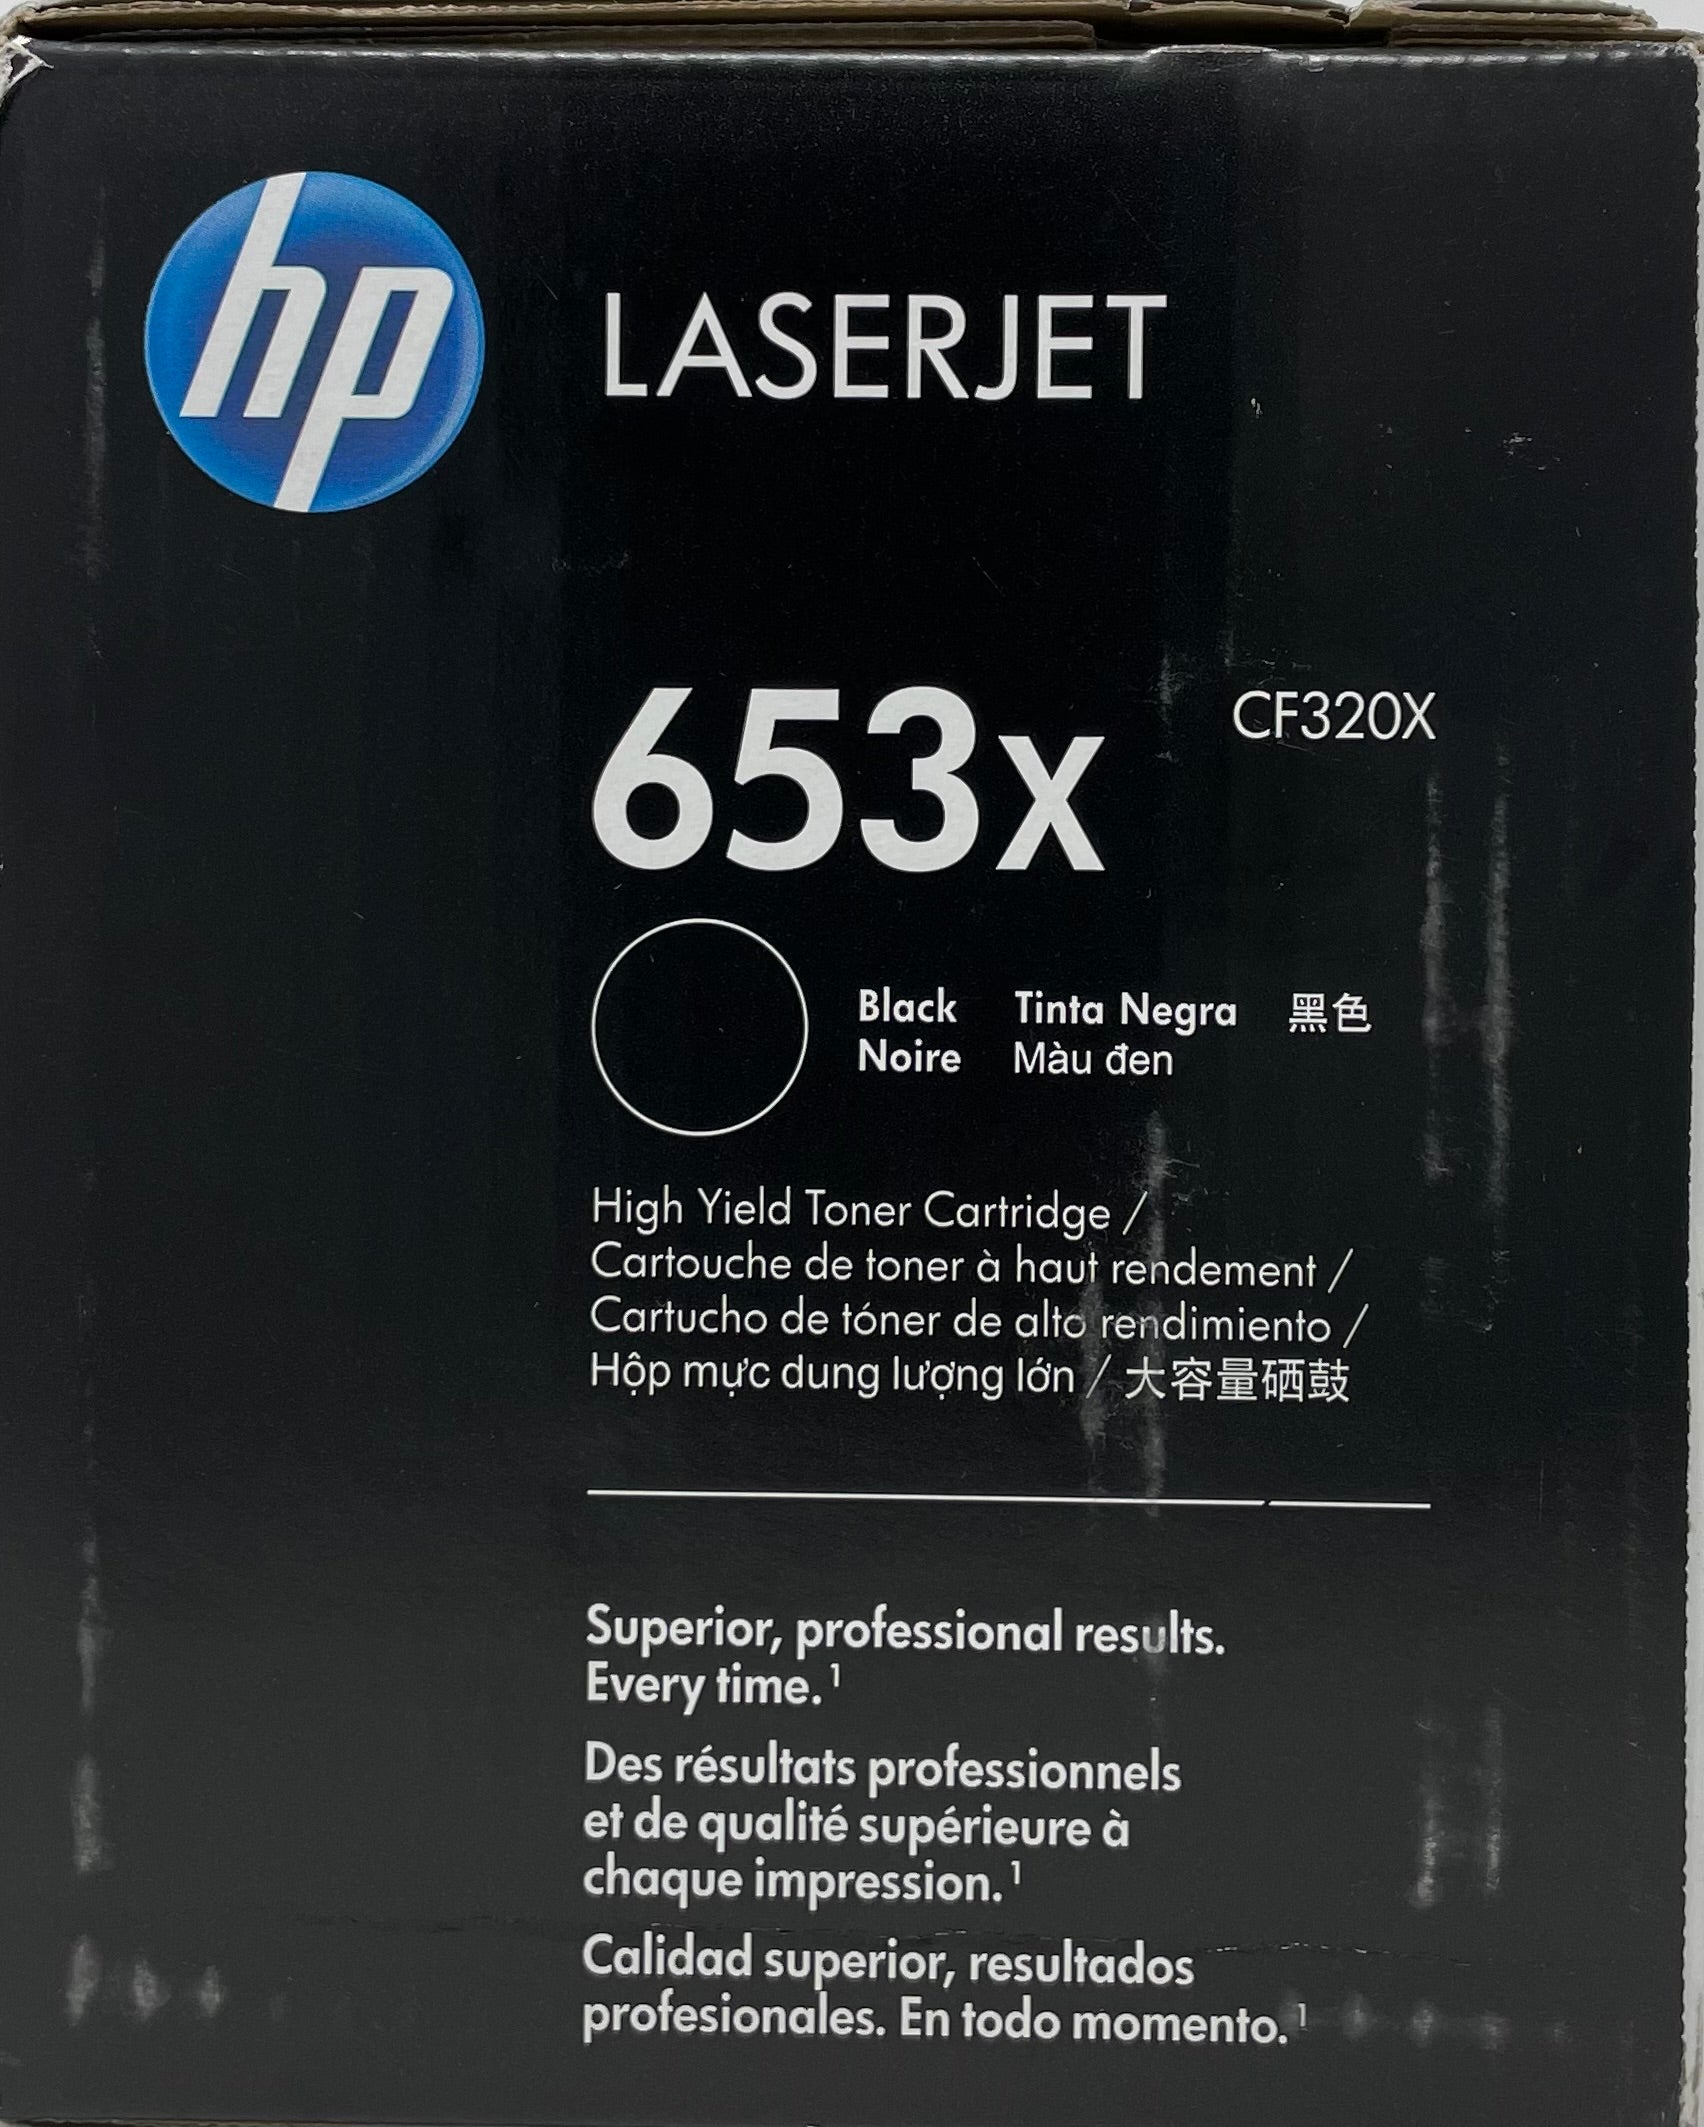 HP 653X High Yield Toner - CF320X - Black - Original HP LaserJet Toner Cartridge